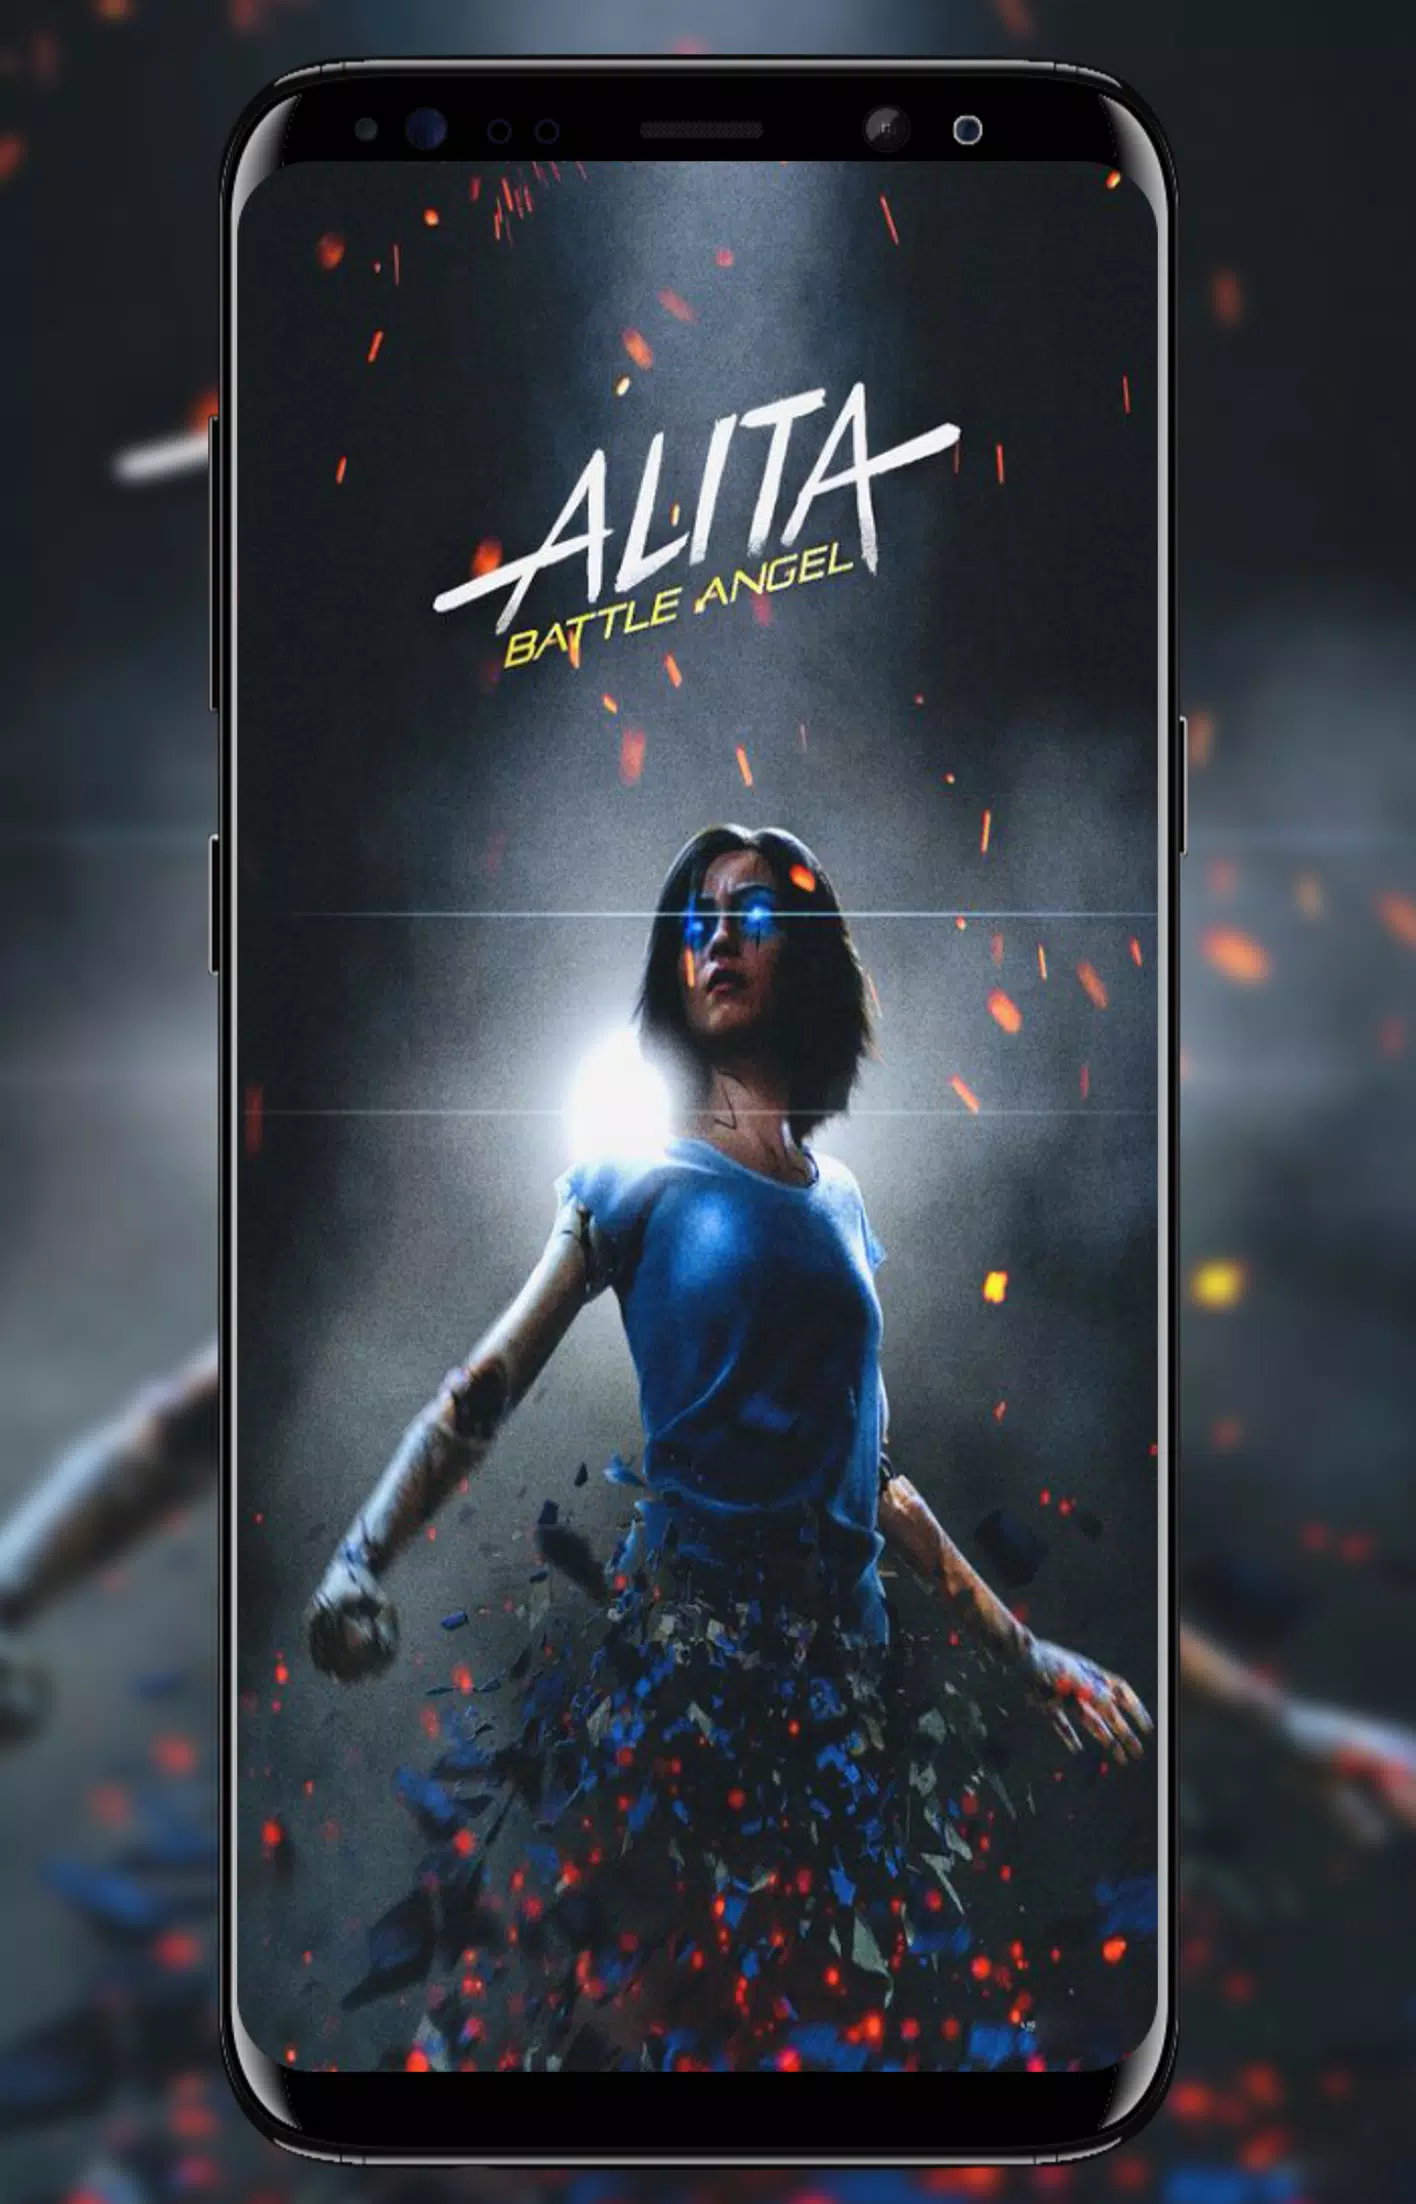 Descarga de APK de ALITA BATTLE ANGEL Wallpapers 4K para Android